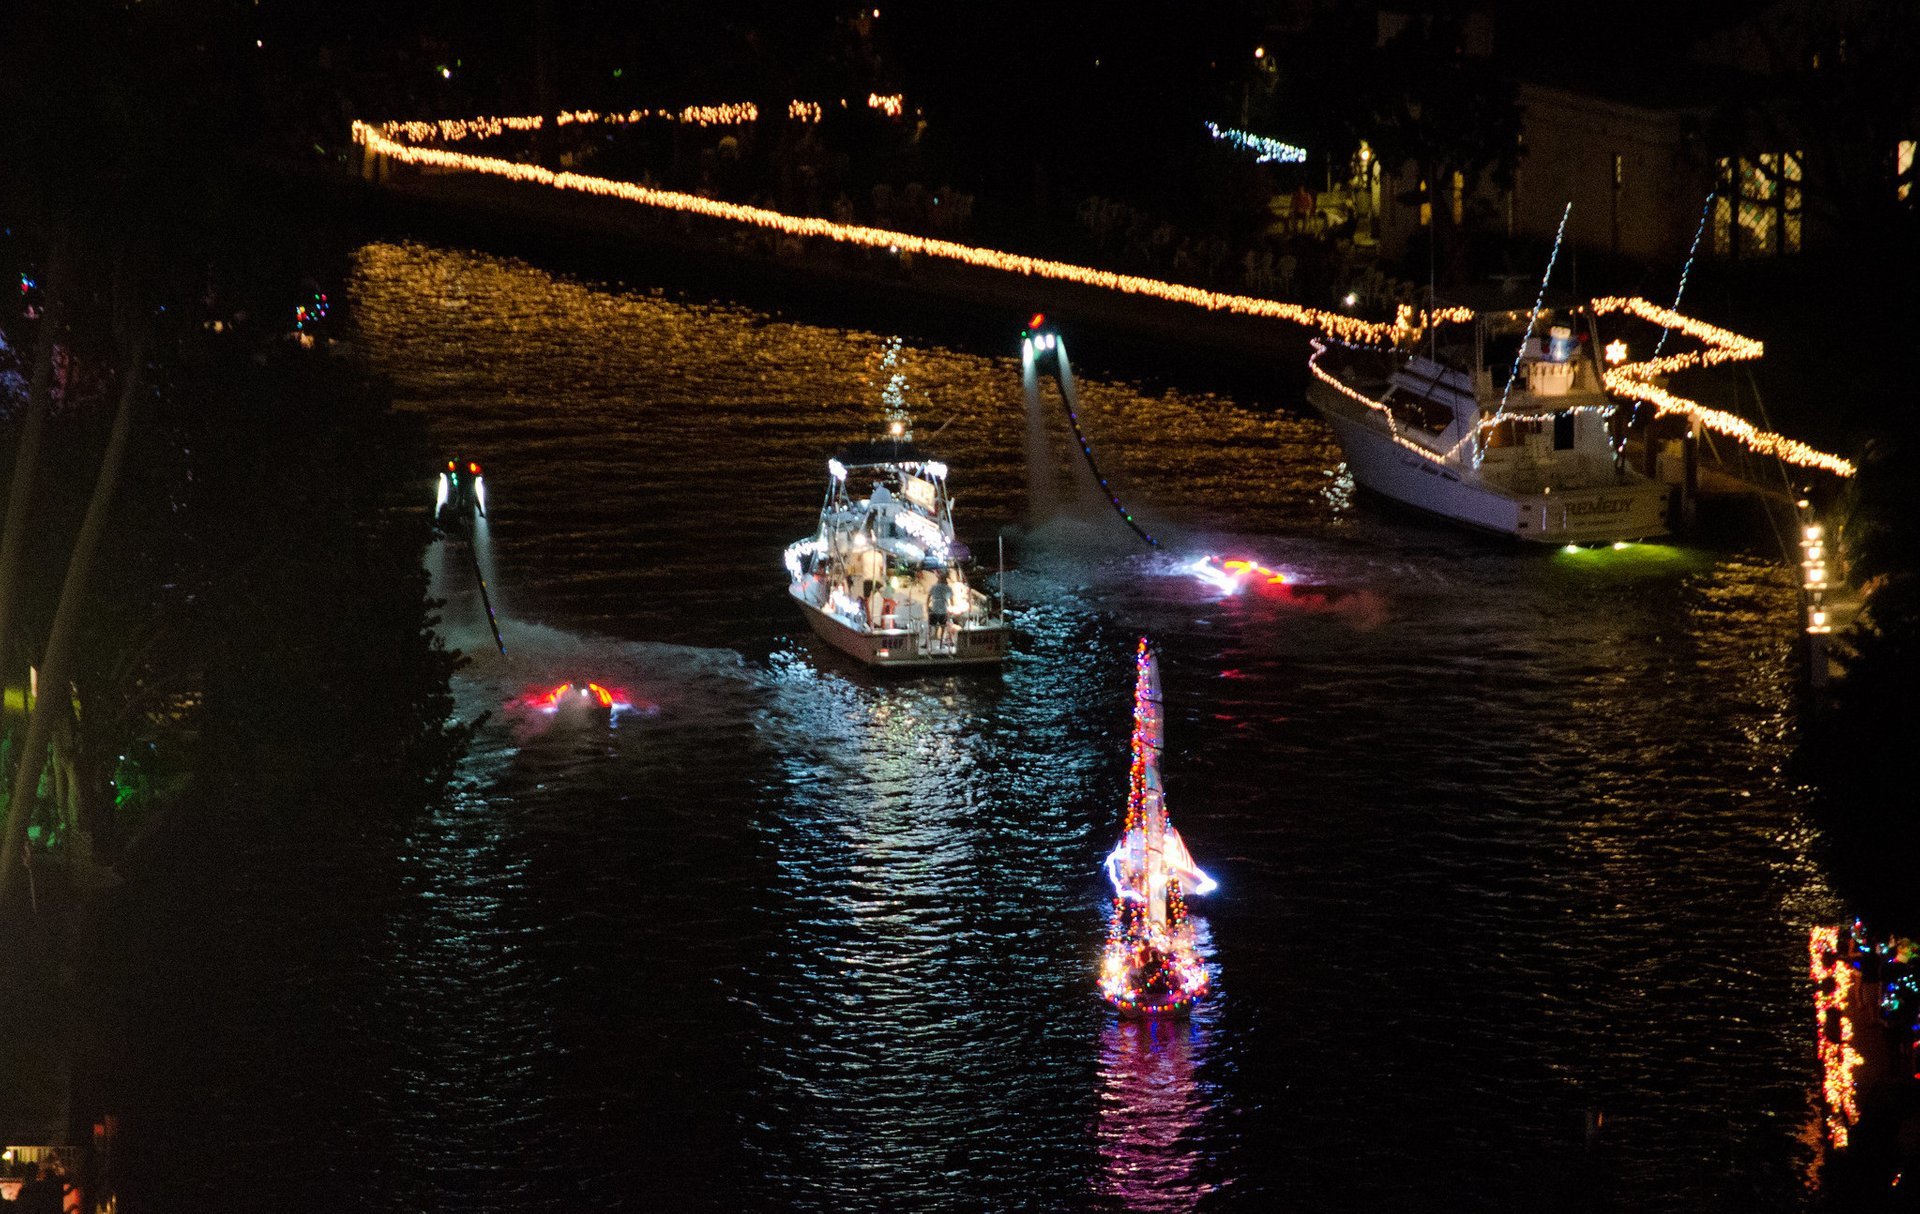 The Seminole Hard Rock Winterfest Boat Parade